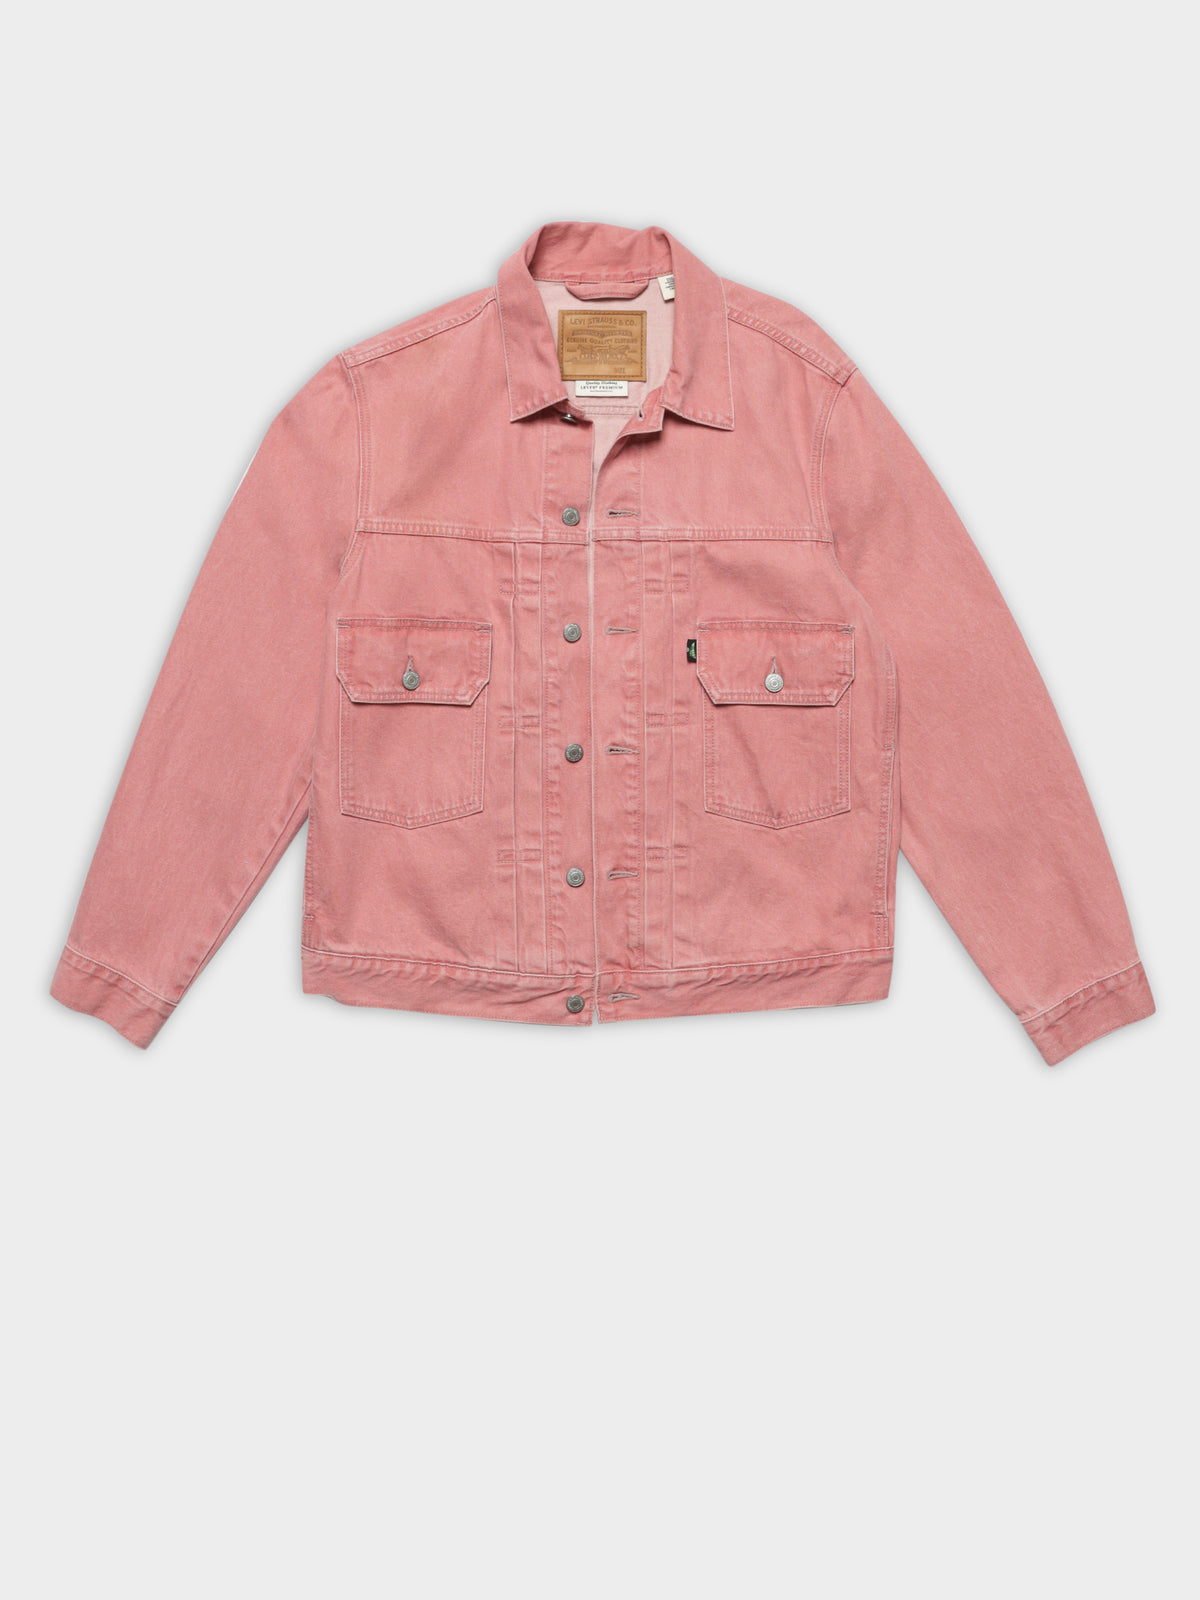 Levis Contemporary Type 2 Trucker Jacket in Pink | S